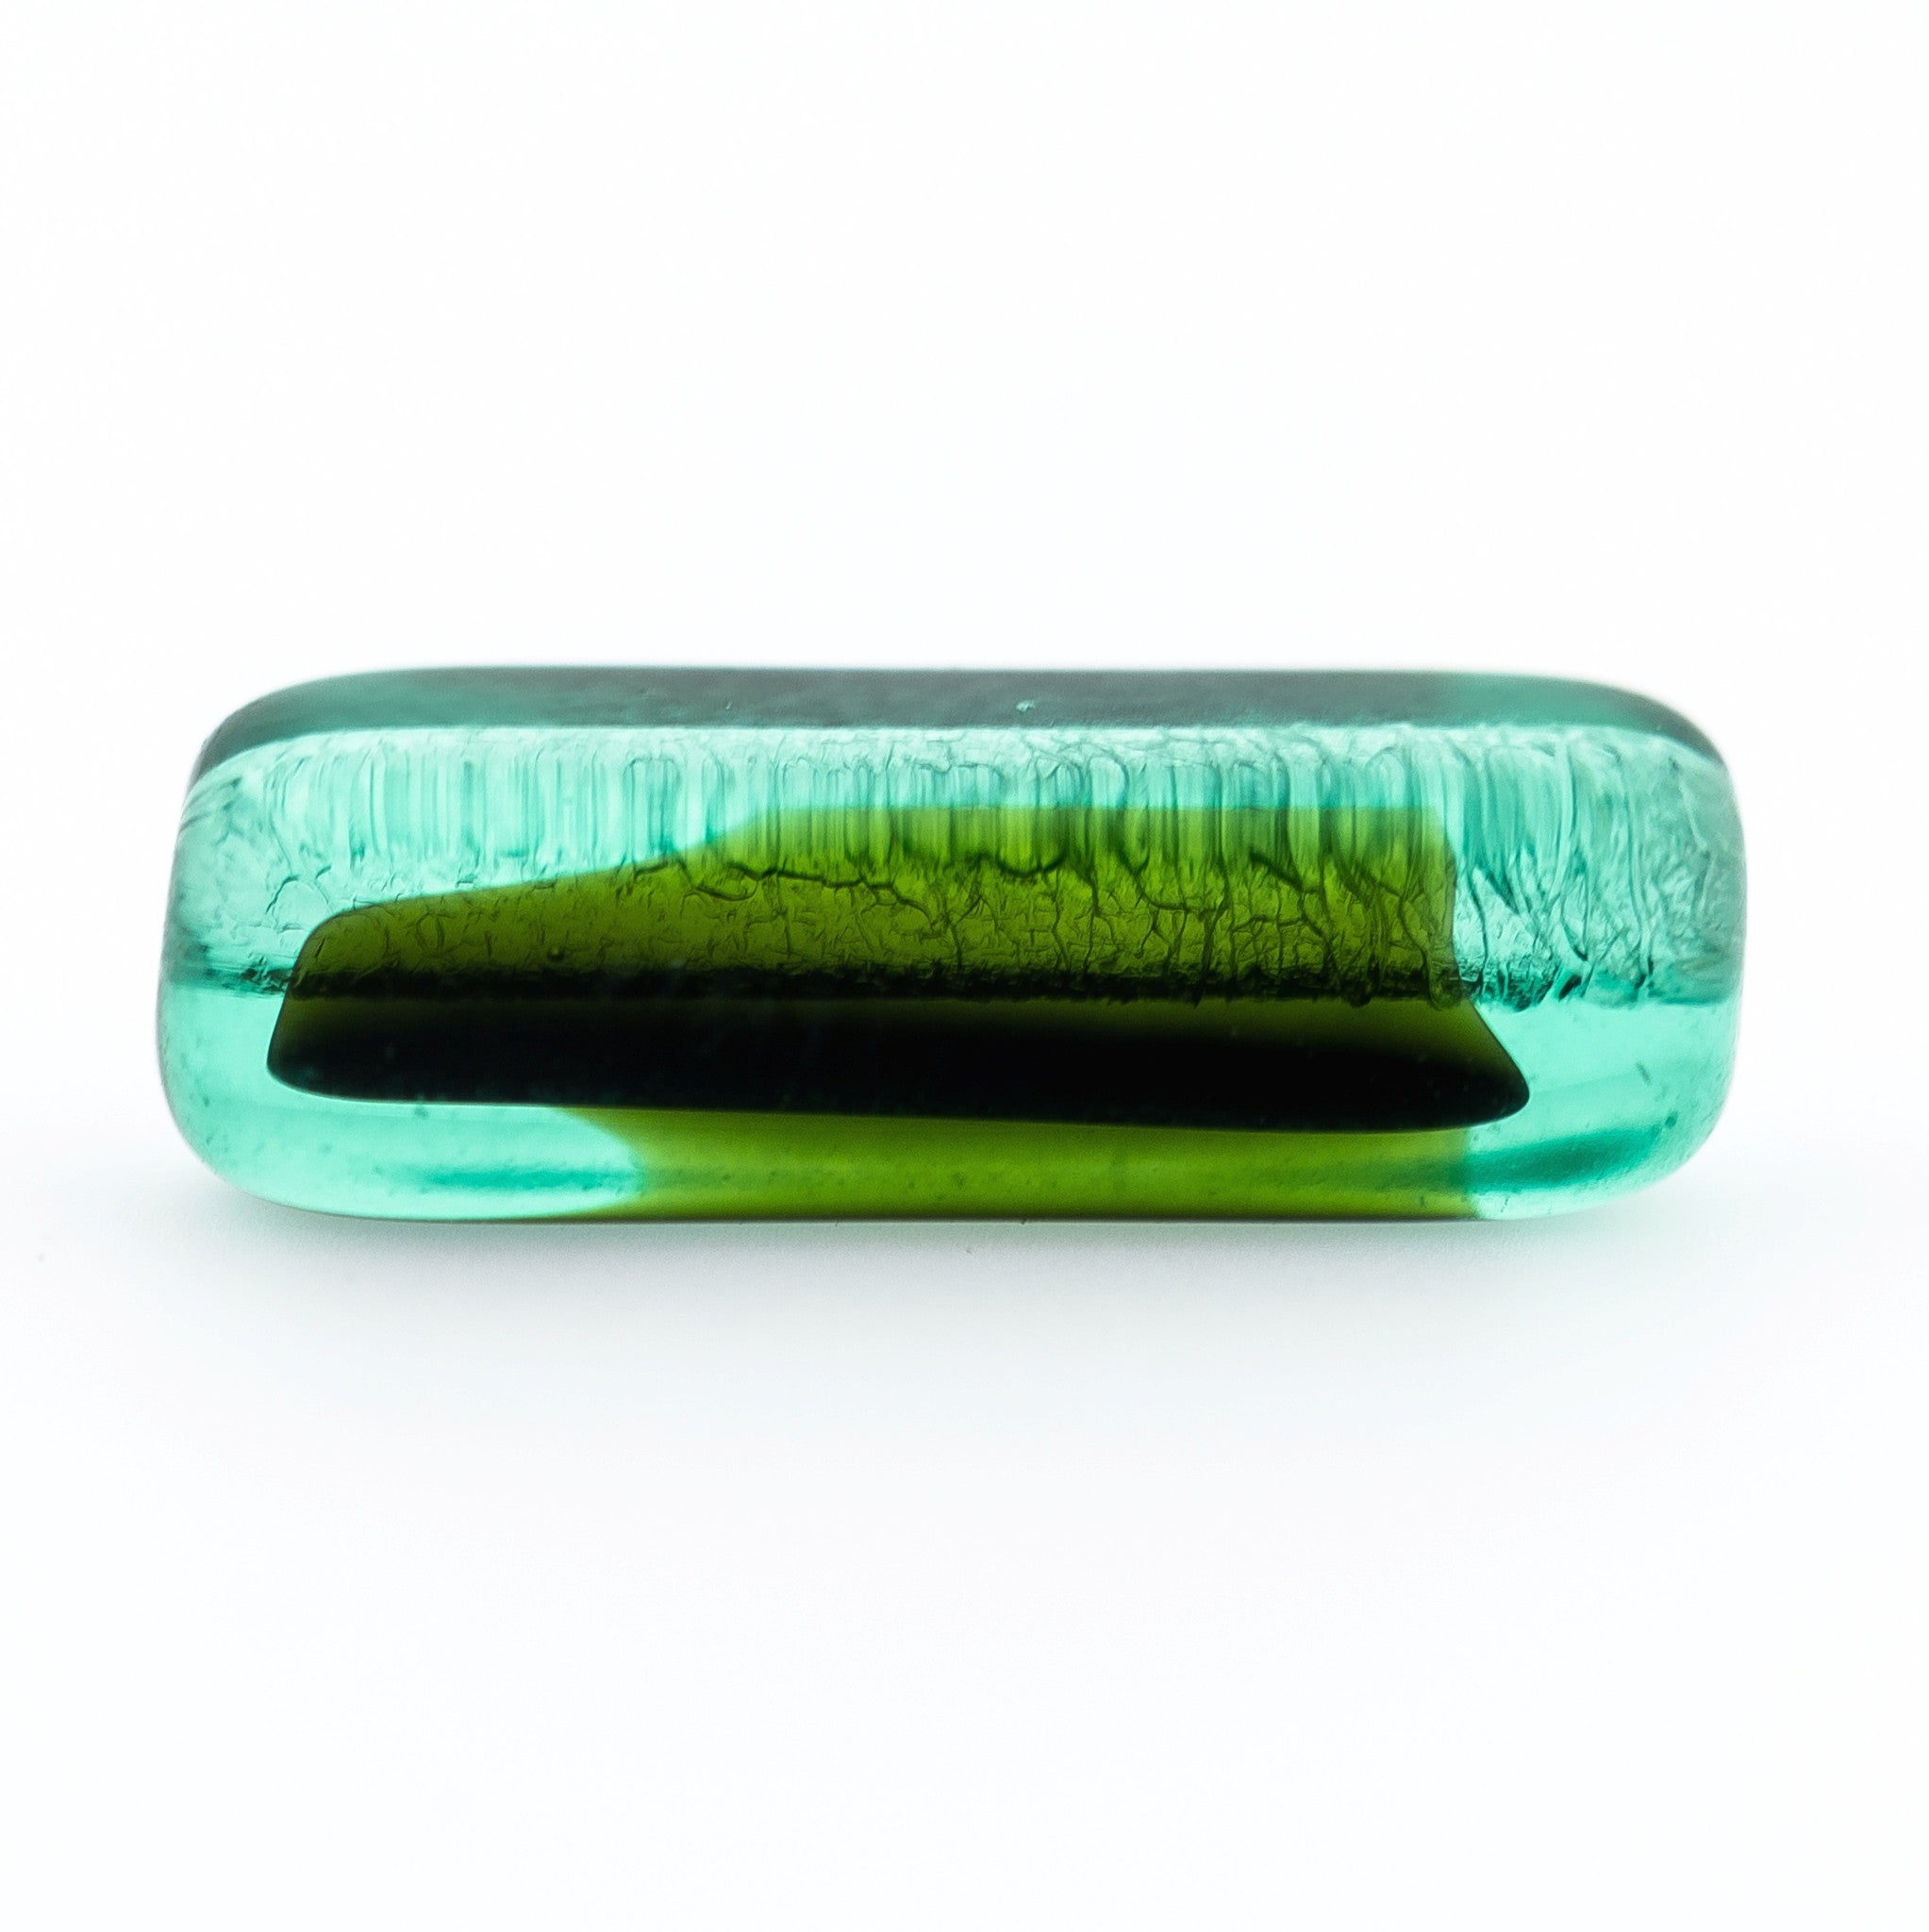 4X13MM Emerald Green Glass Stick Bead (144 pieces)